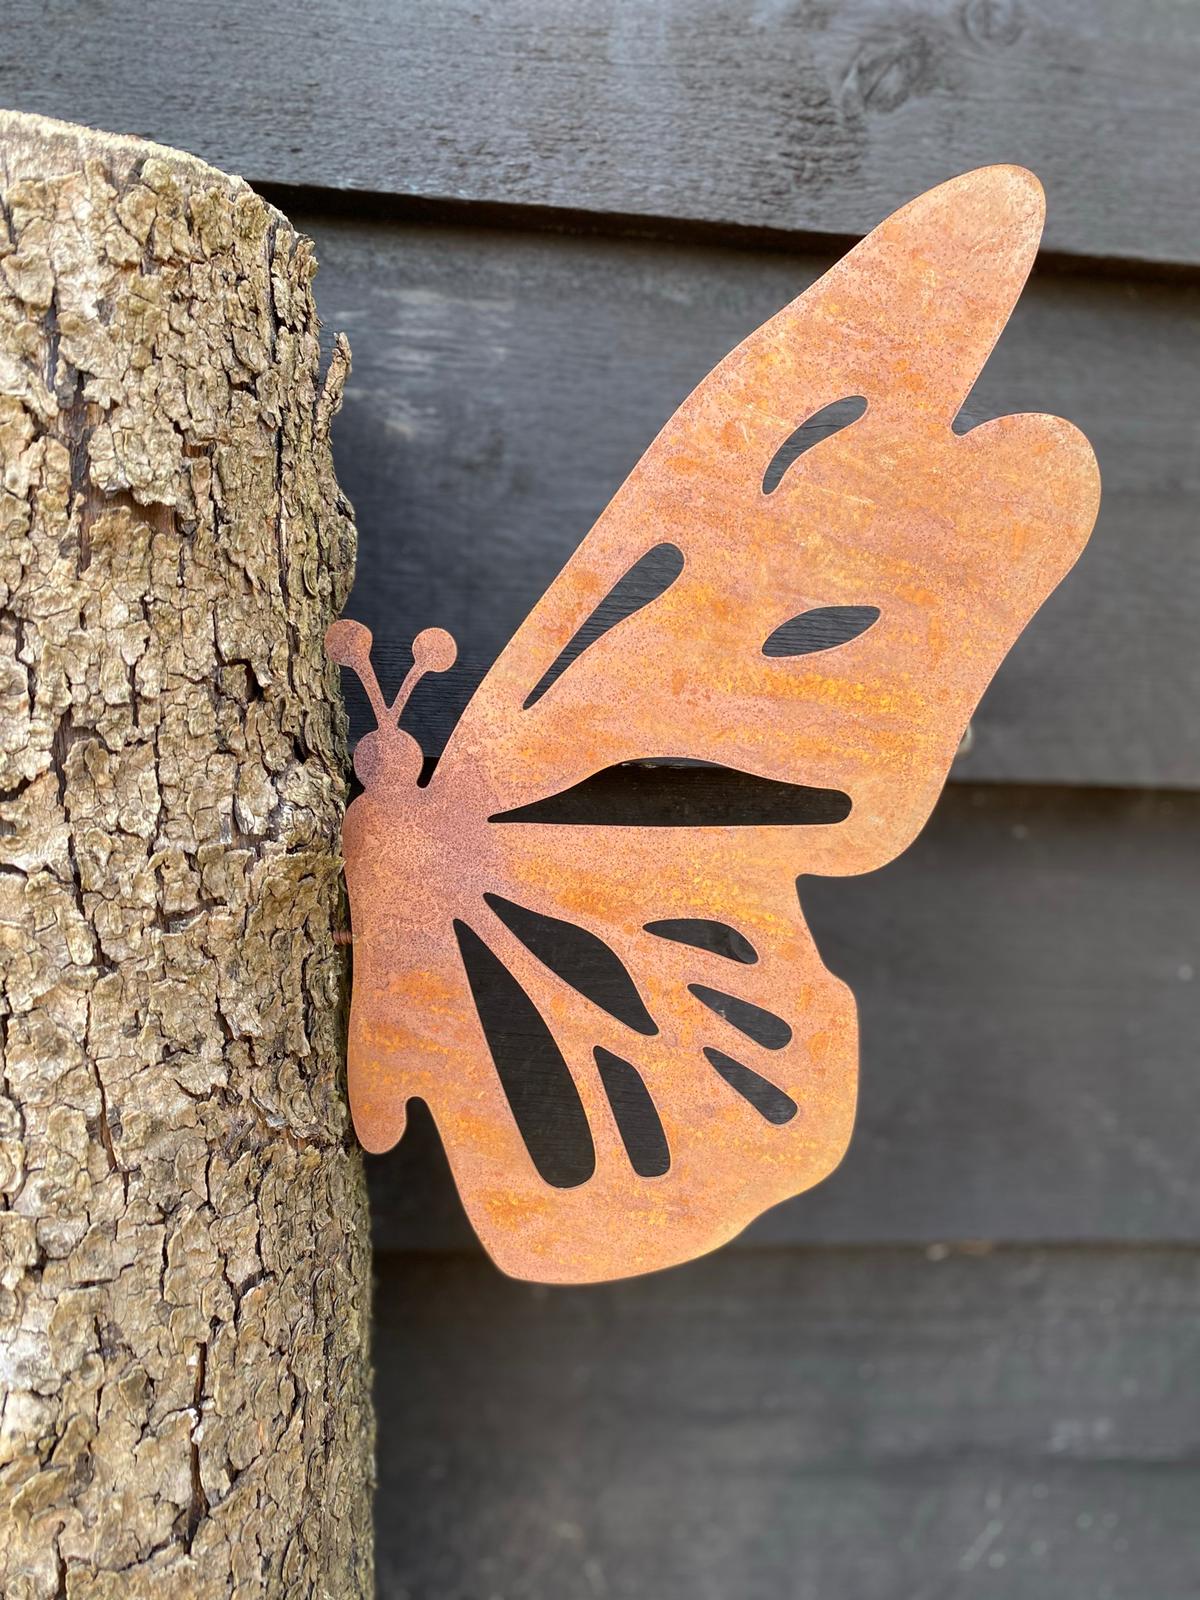 Schroef vlinder roest - Brocante bij Ingie